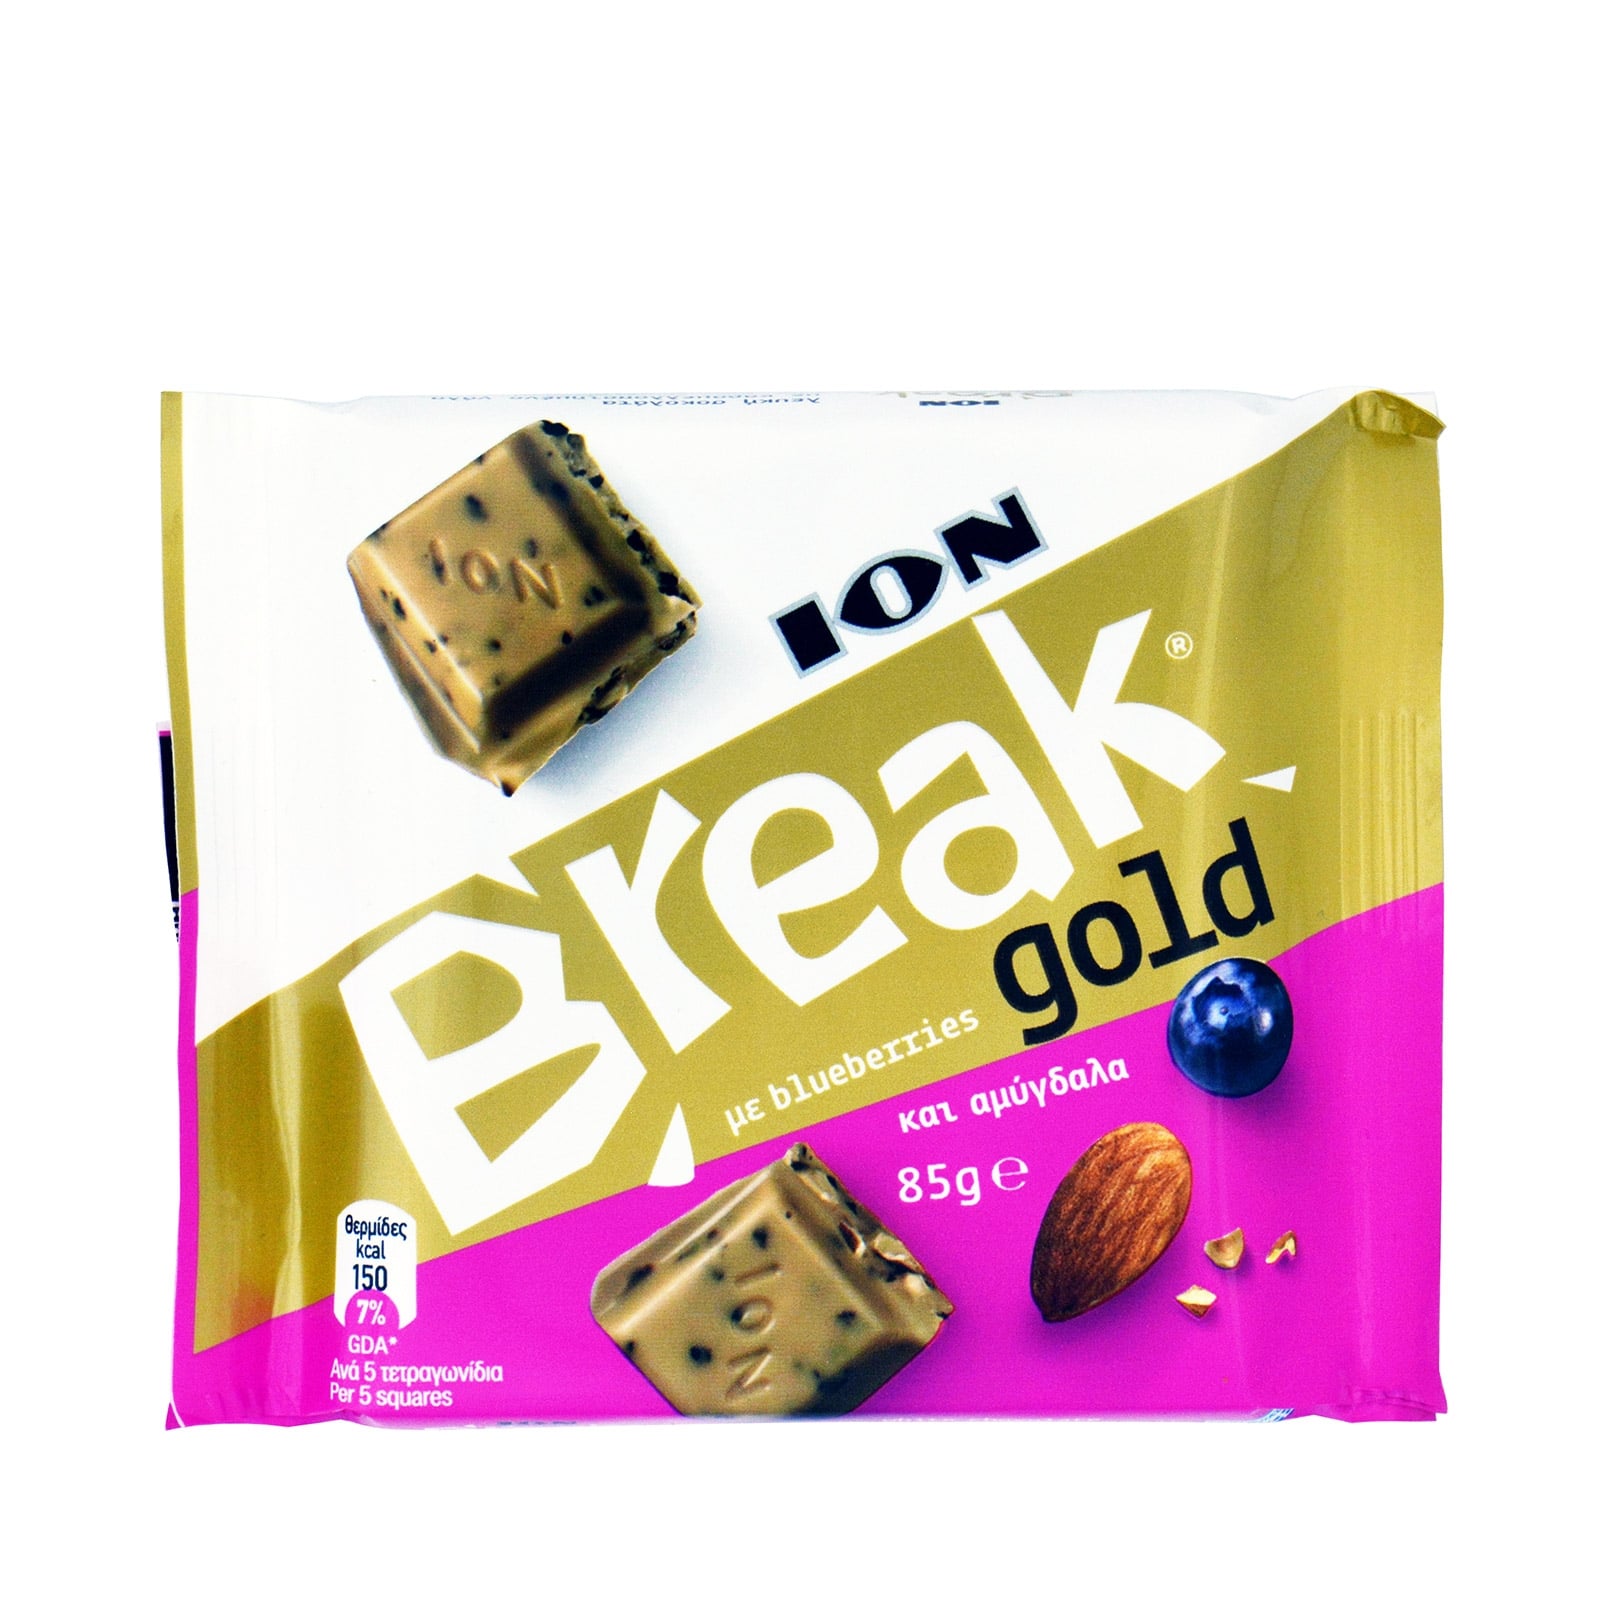 Choco break. Греческий шоколад Break. Греческий шоколад ion. Шоколад брейк.